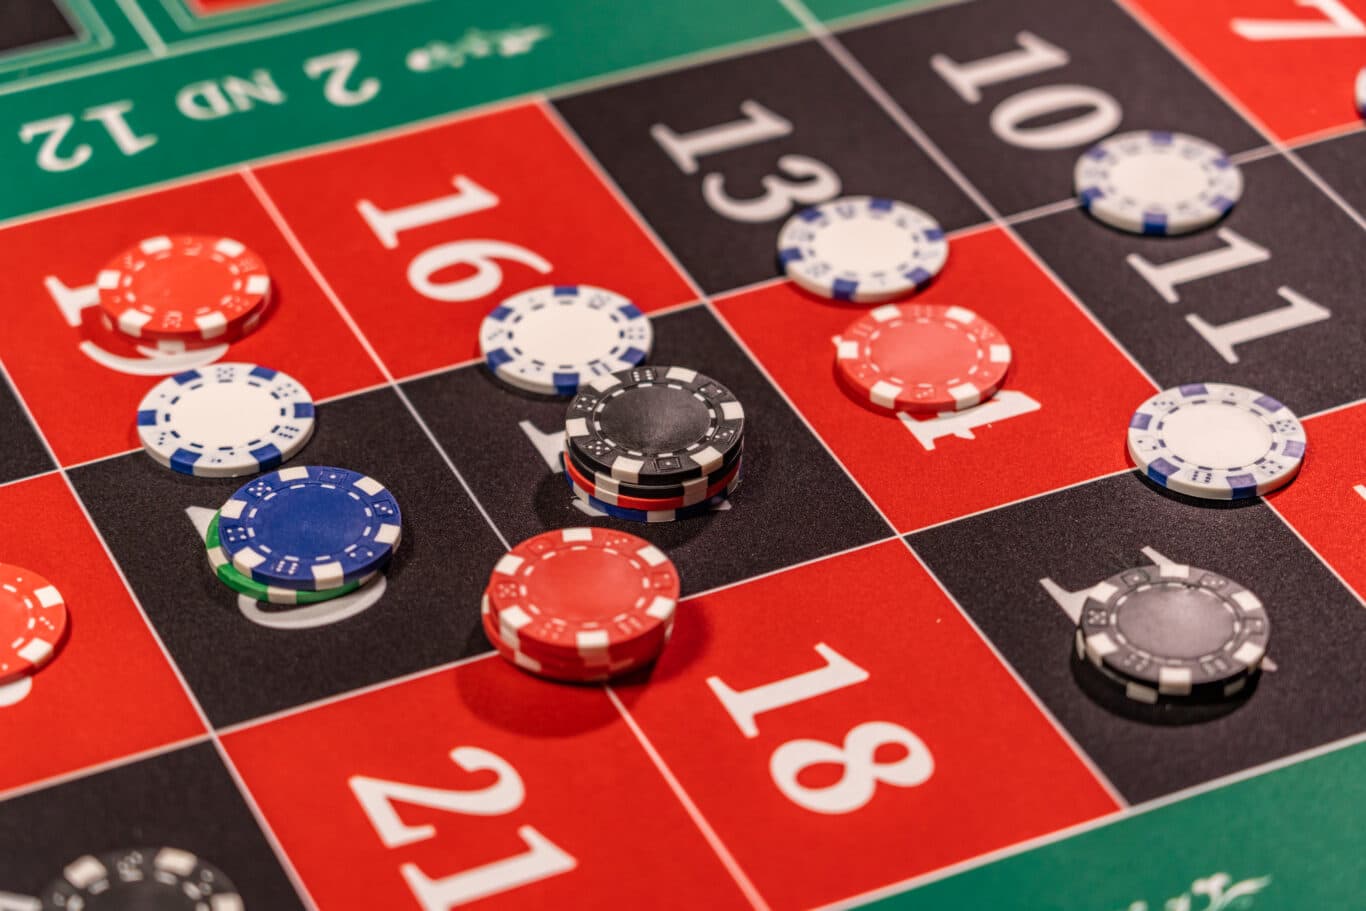 roulette table at the casino 2021 08 31 09 44 05 utc